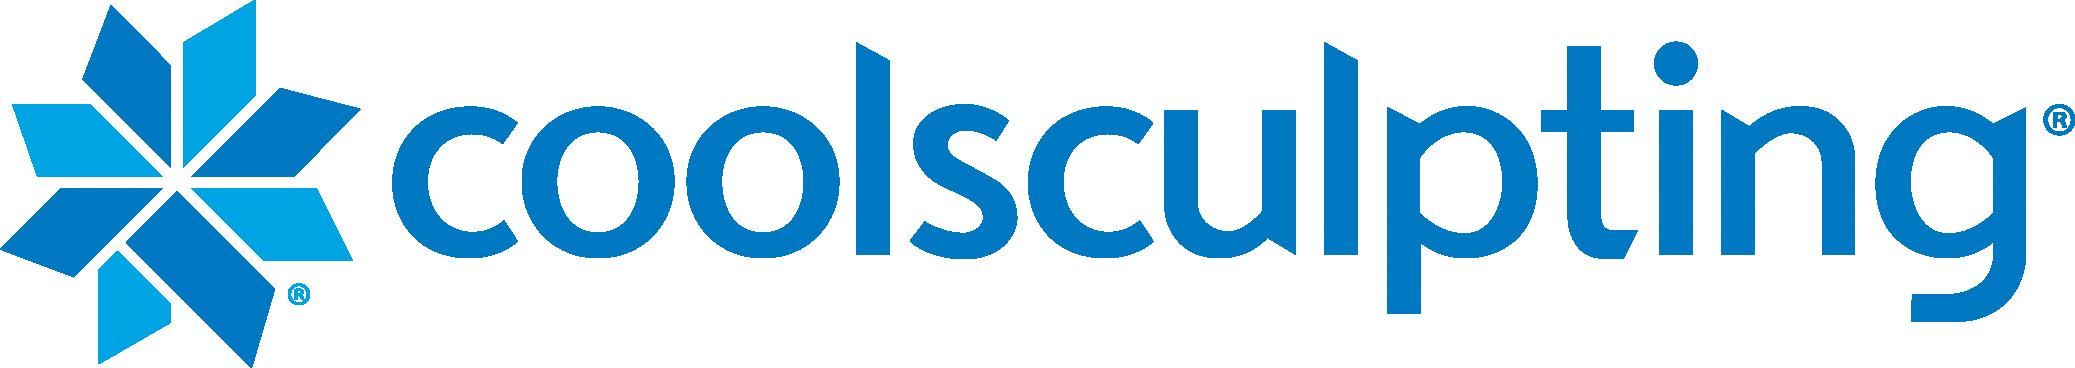 4-logo-with-dark-blue-font (1)-1